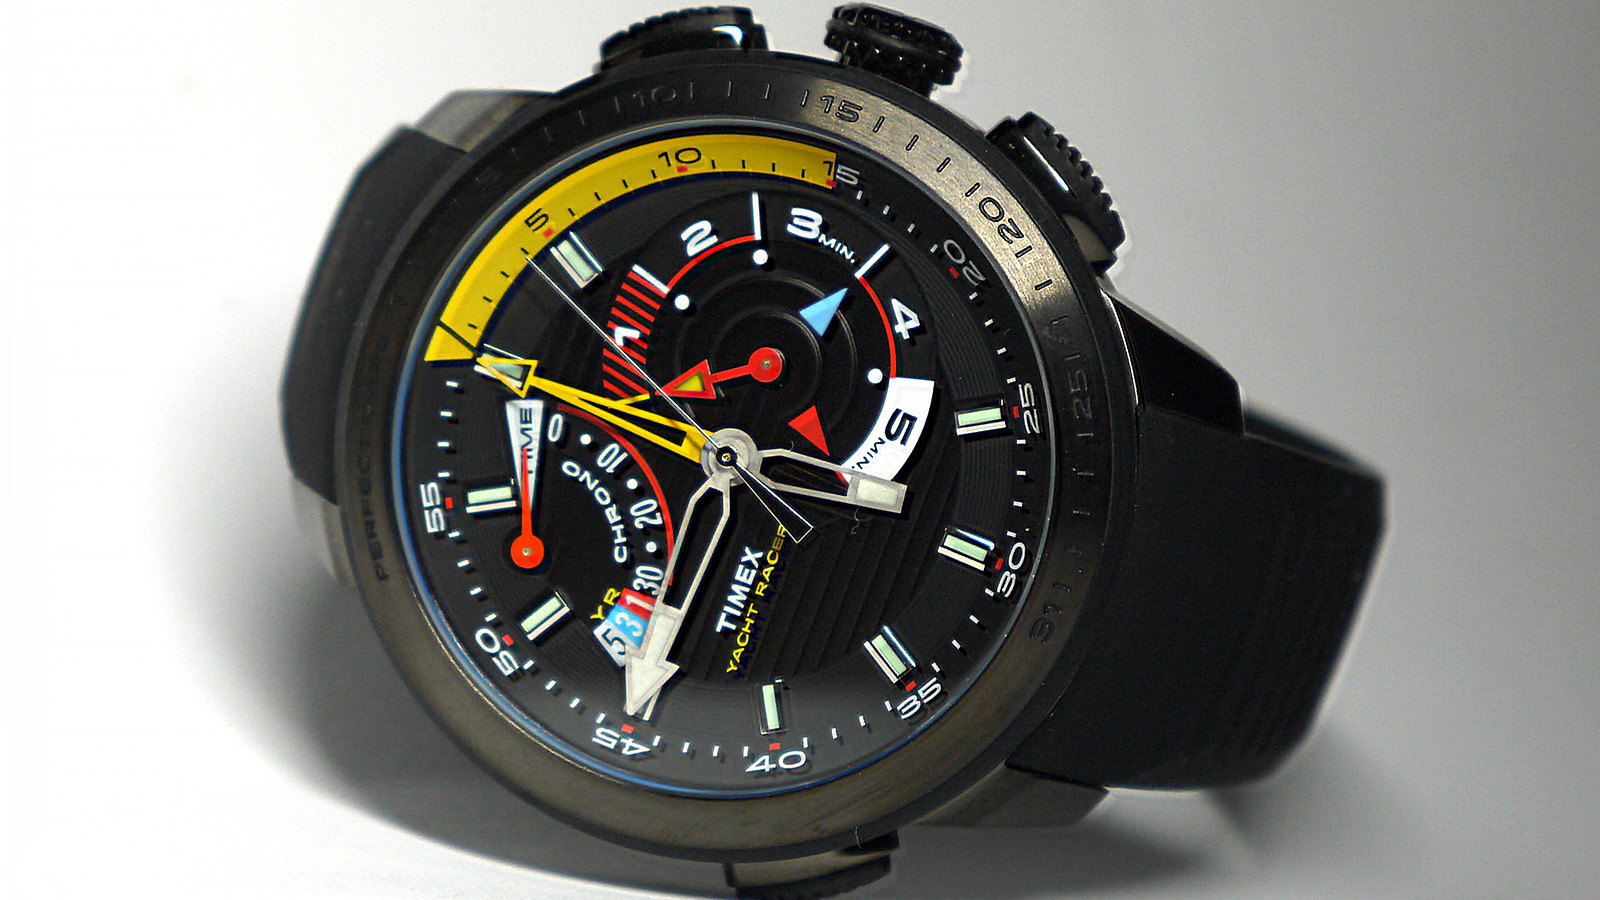 Timex reloj hombre Timex® Yacht Timer cronógrafo TW2P44300